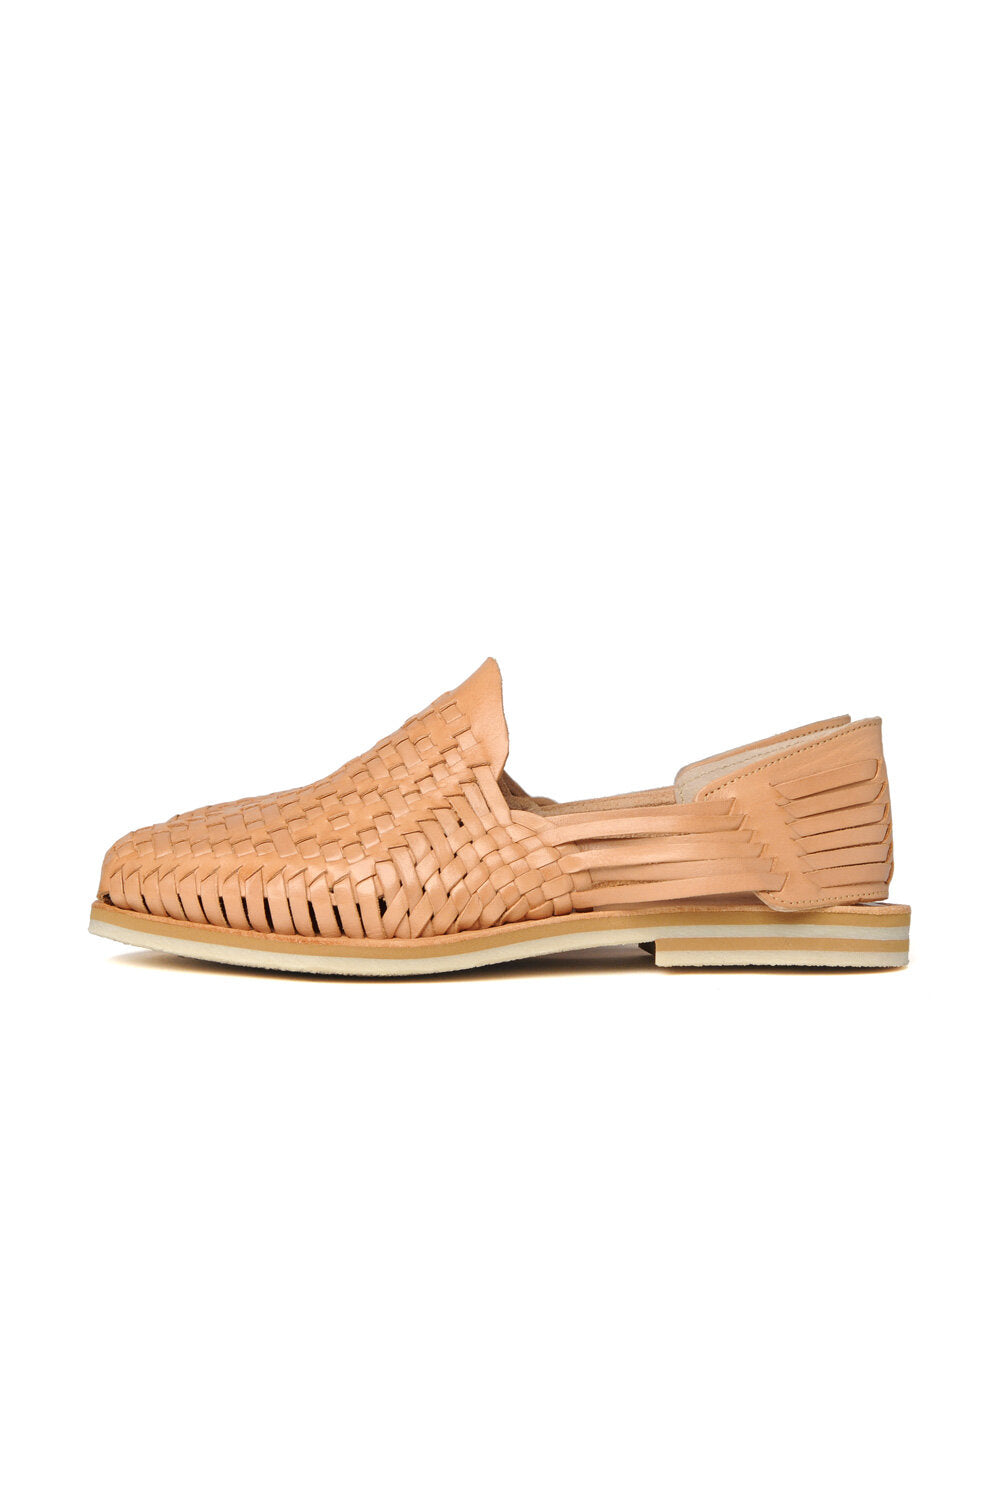 Rio Grande Leather Huarache | Slip on Vegetable Tanned Sandals | Tan 1